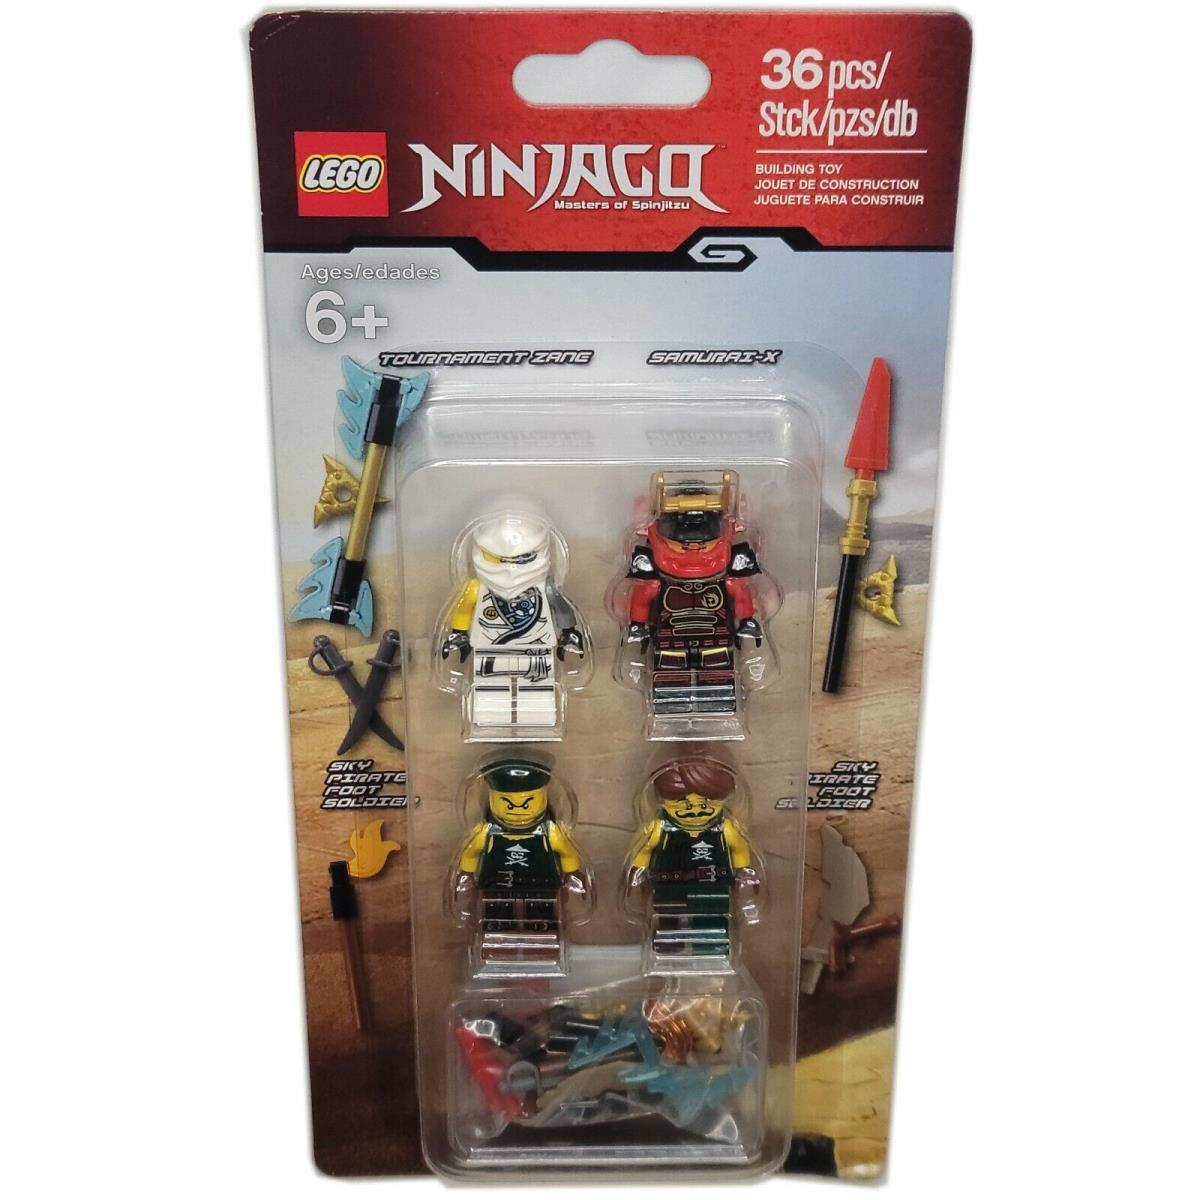 Lego 853544 Ninjago Accessory Set Tournament Zane Samurai-x Sky Pirate Soldier